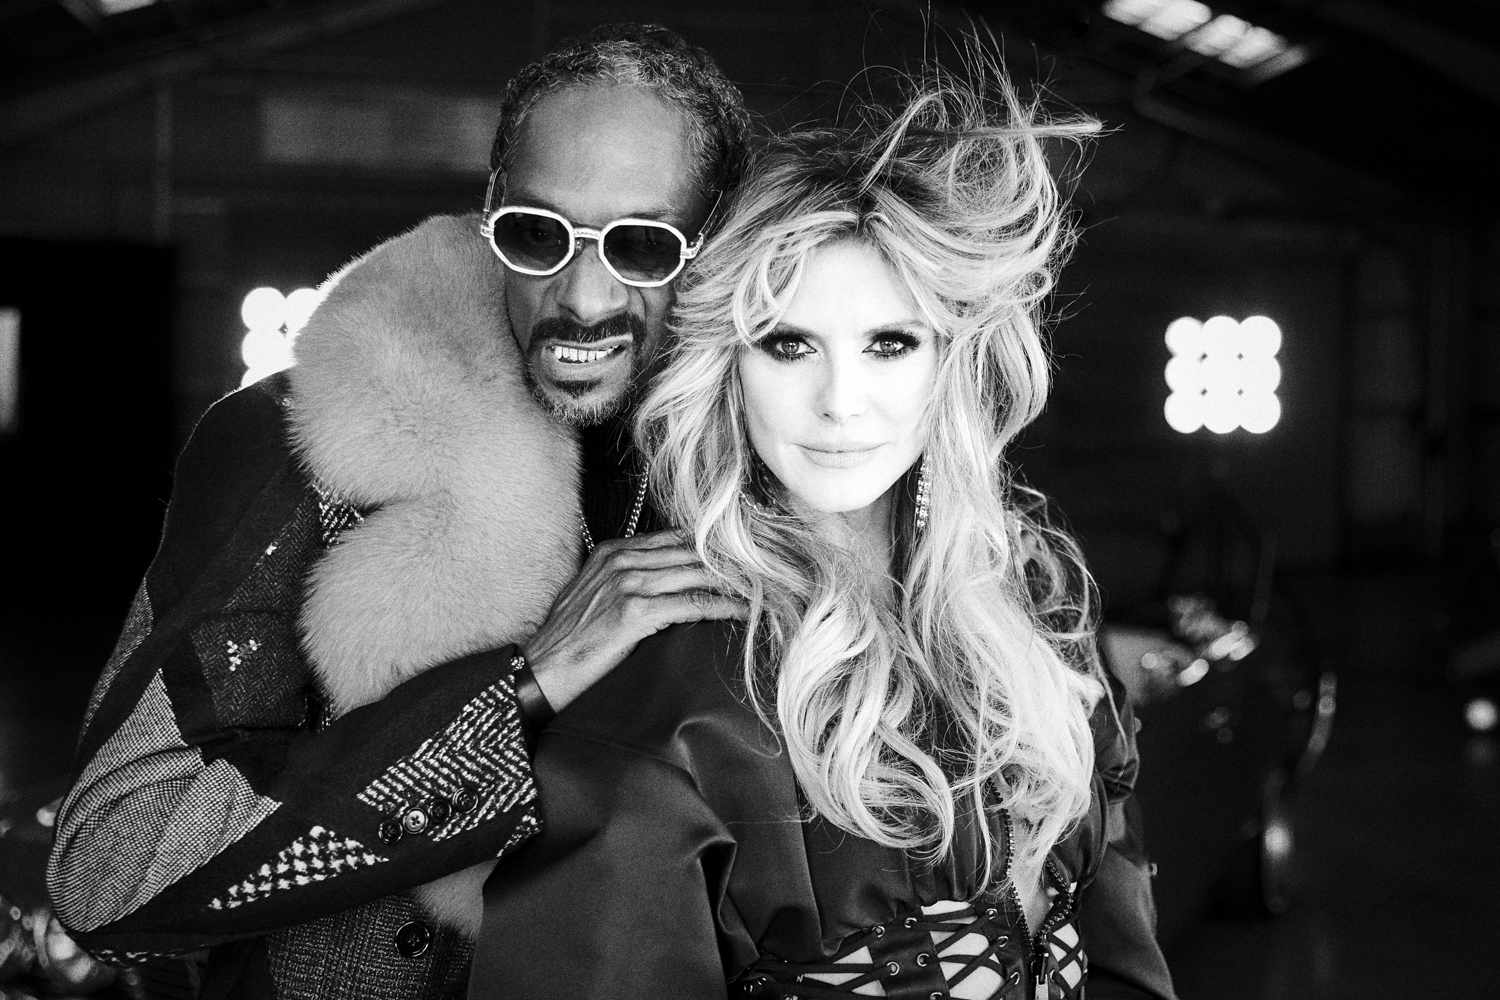 Heidi Klum collaborates with Snoop Dogg on “Chai Tea with Heidi”